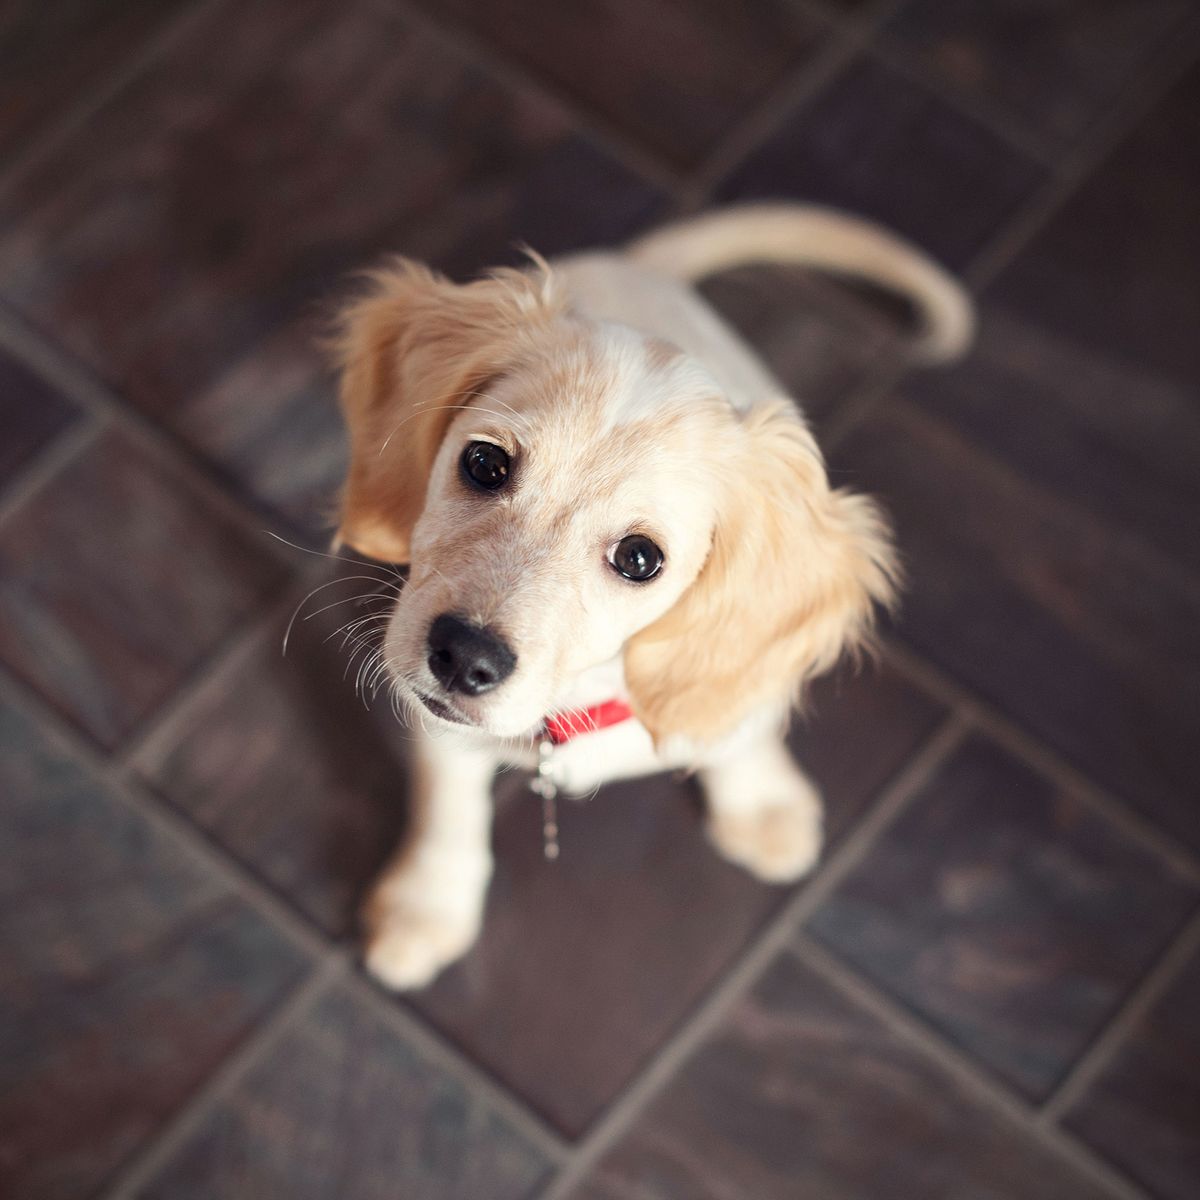 adopting a rehomed dog